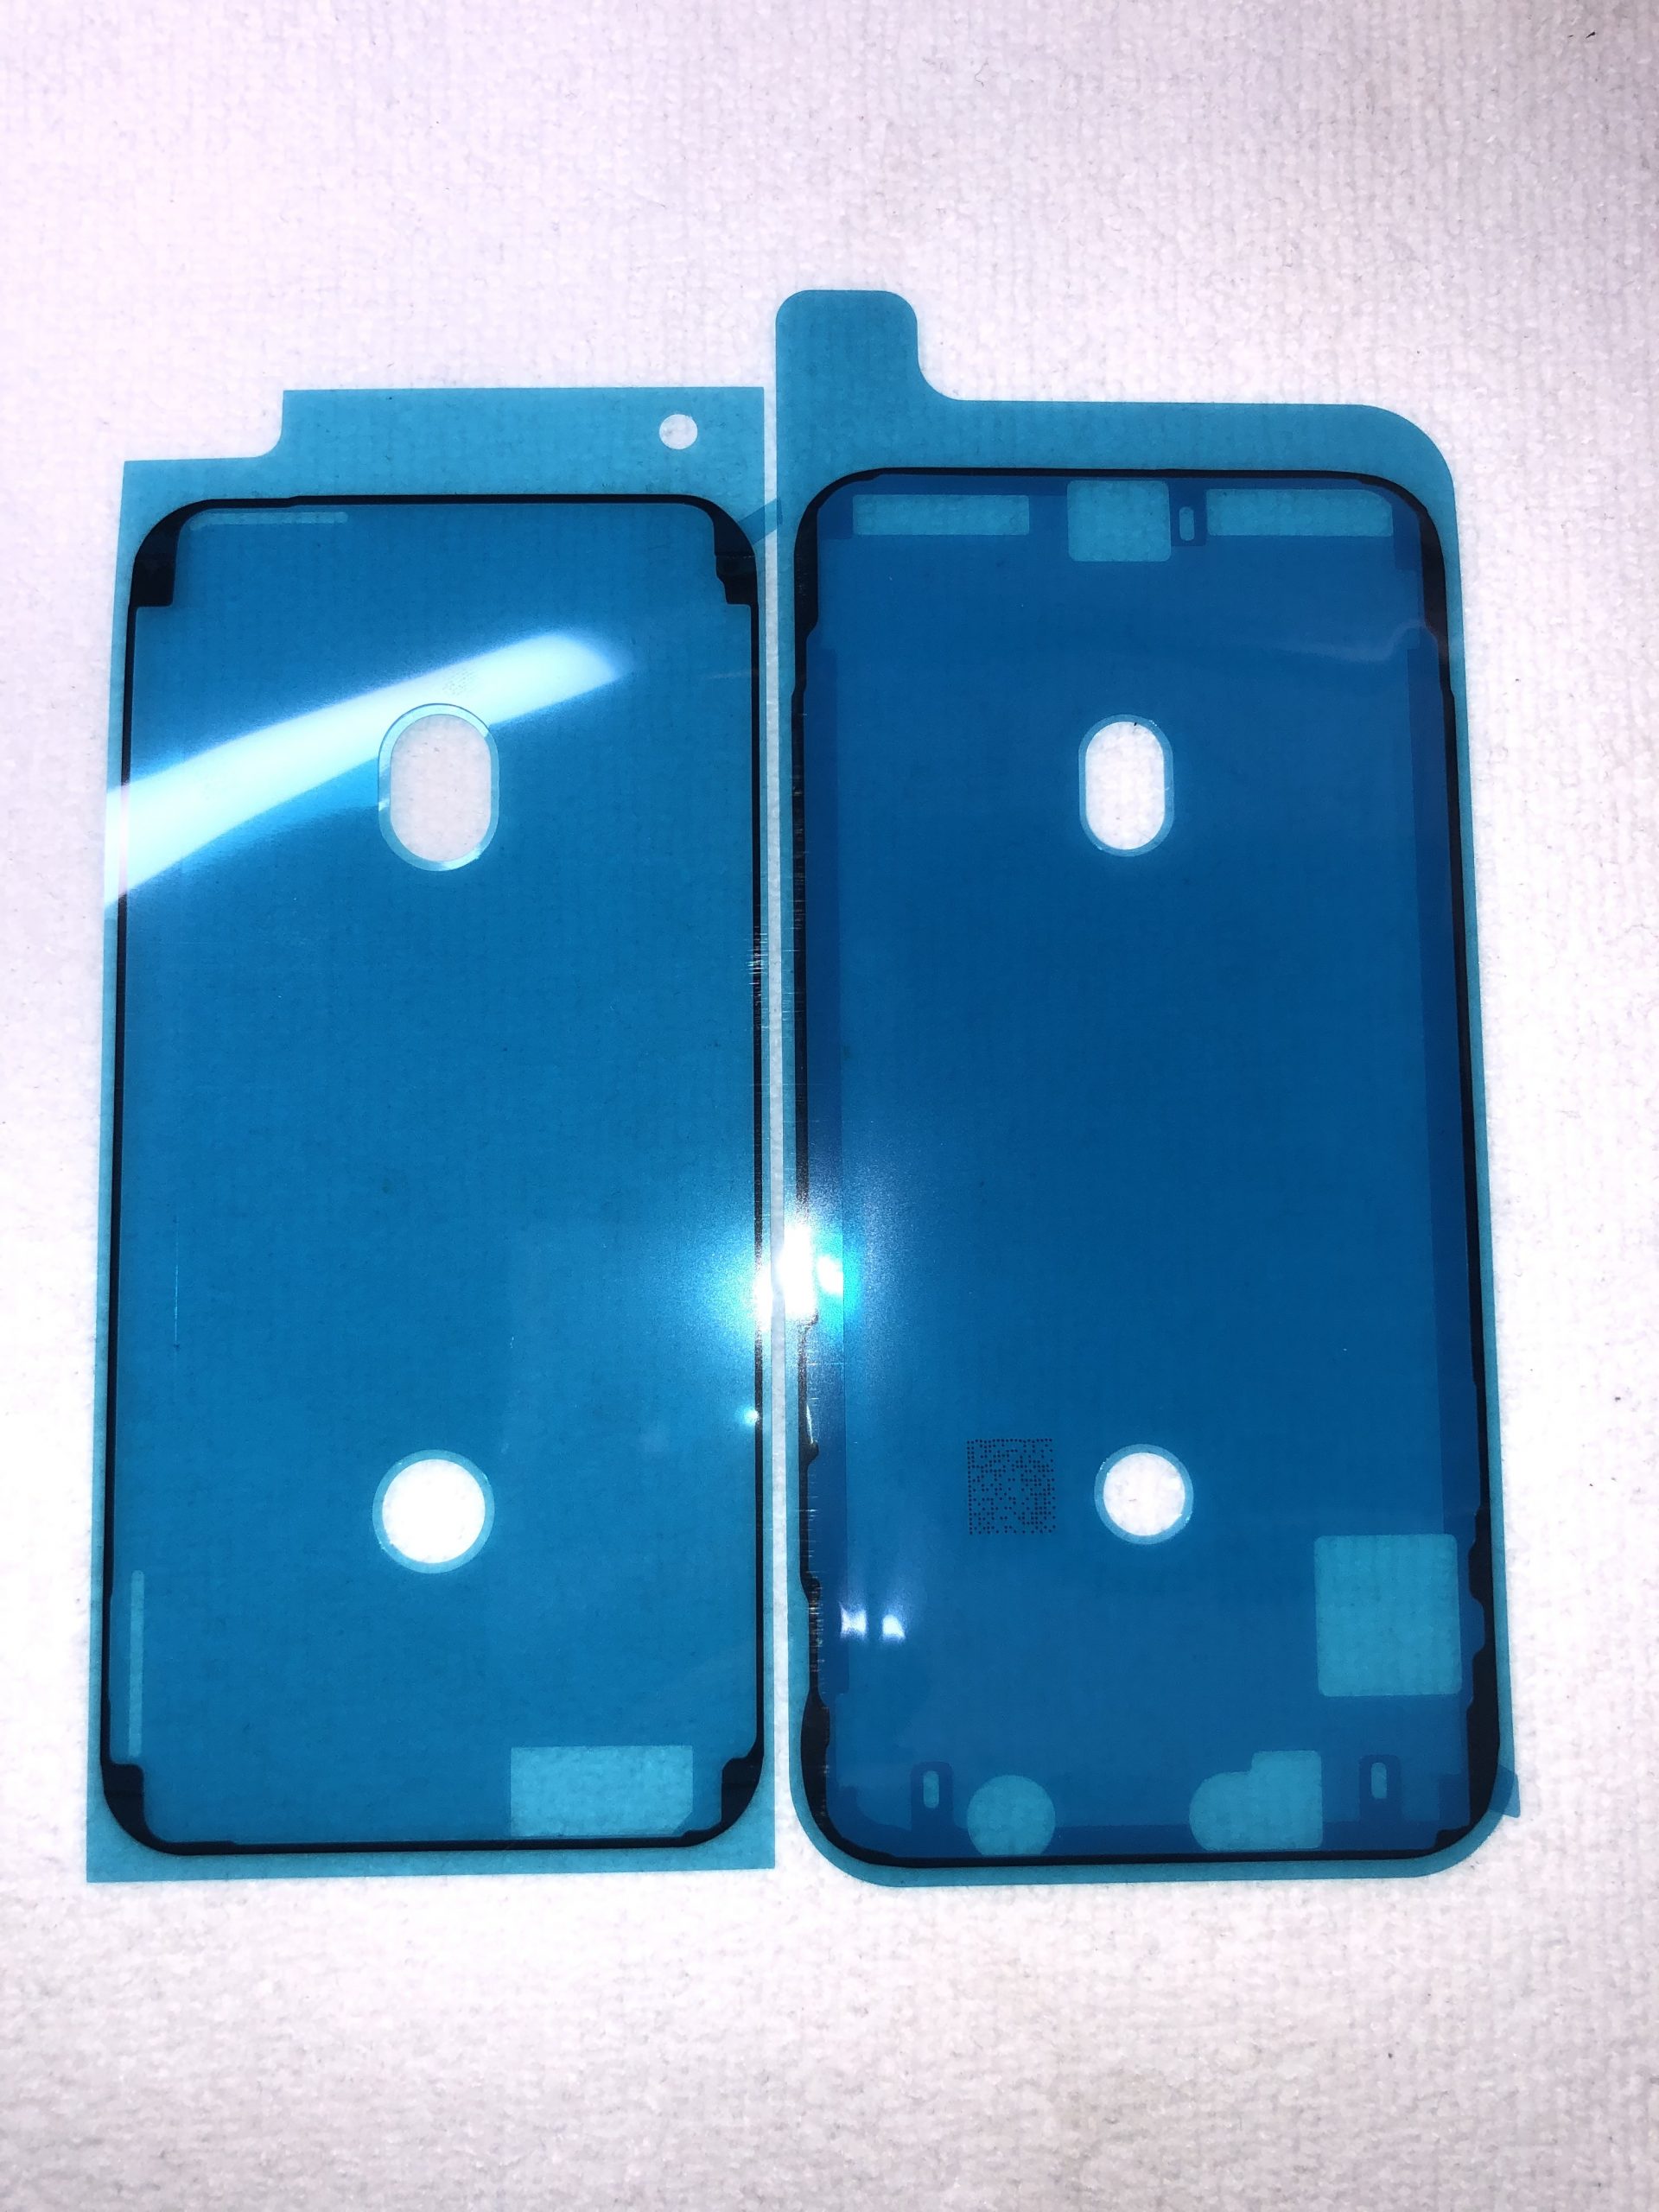 【iPhone修理ジャパン熊本店は日曜日も営業中】防水テープ張ってます